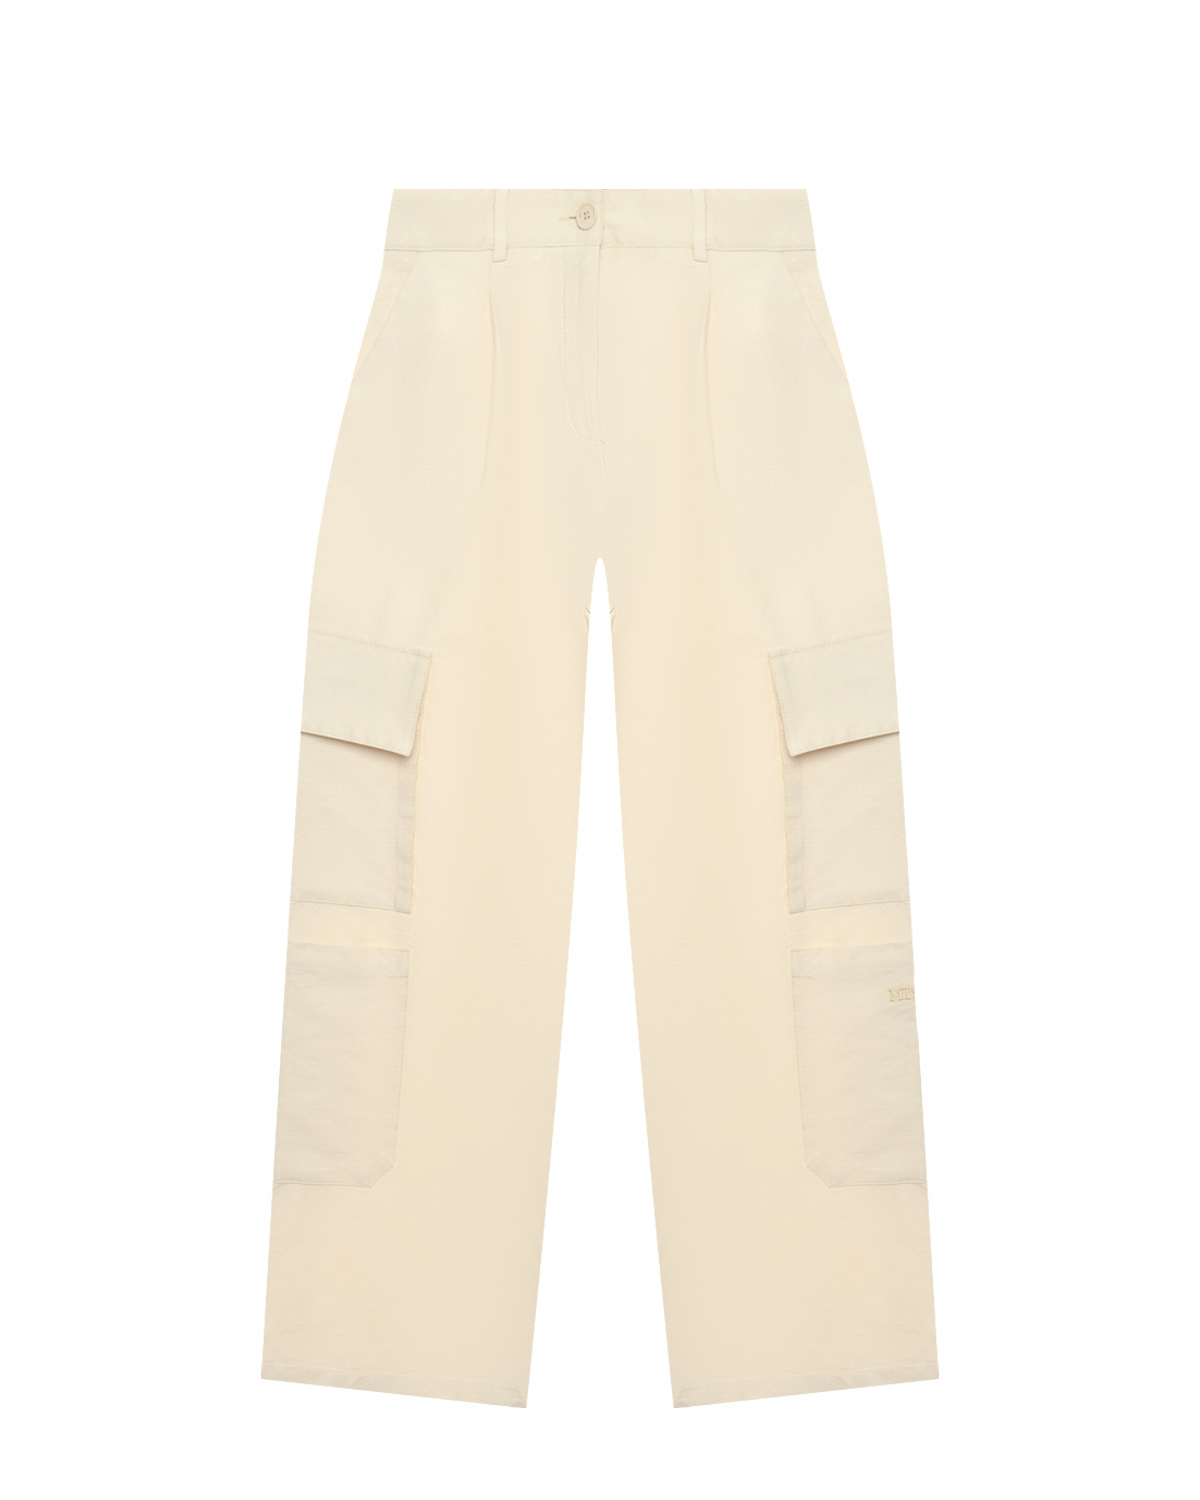 Брюки кремового цвета с карманами-карго Missoni костюмные брюки с карманами карго